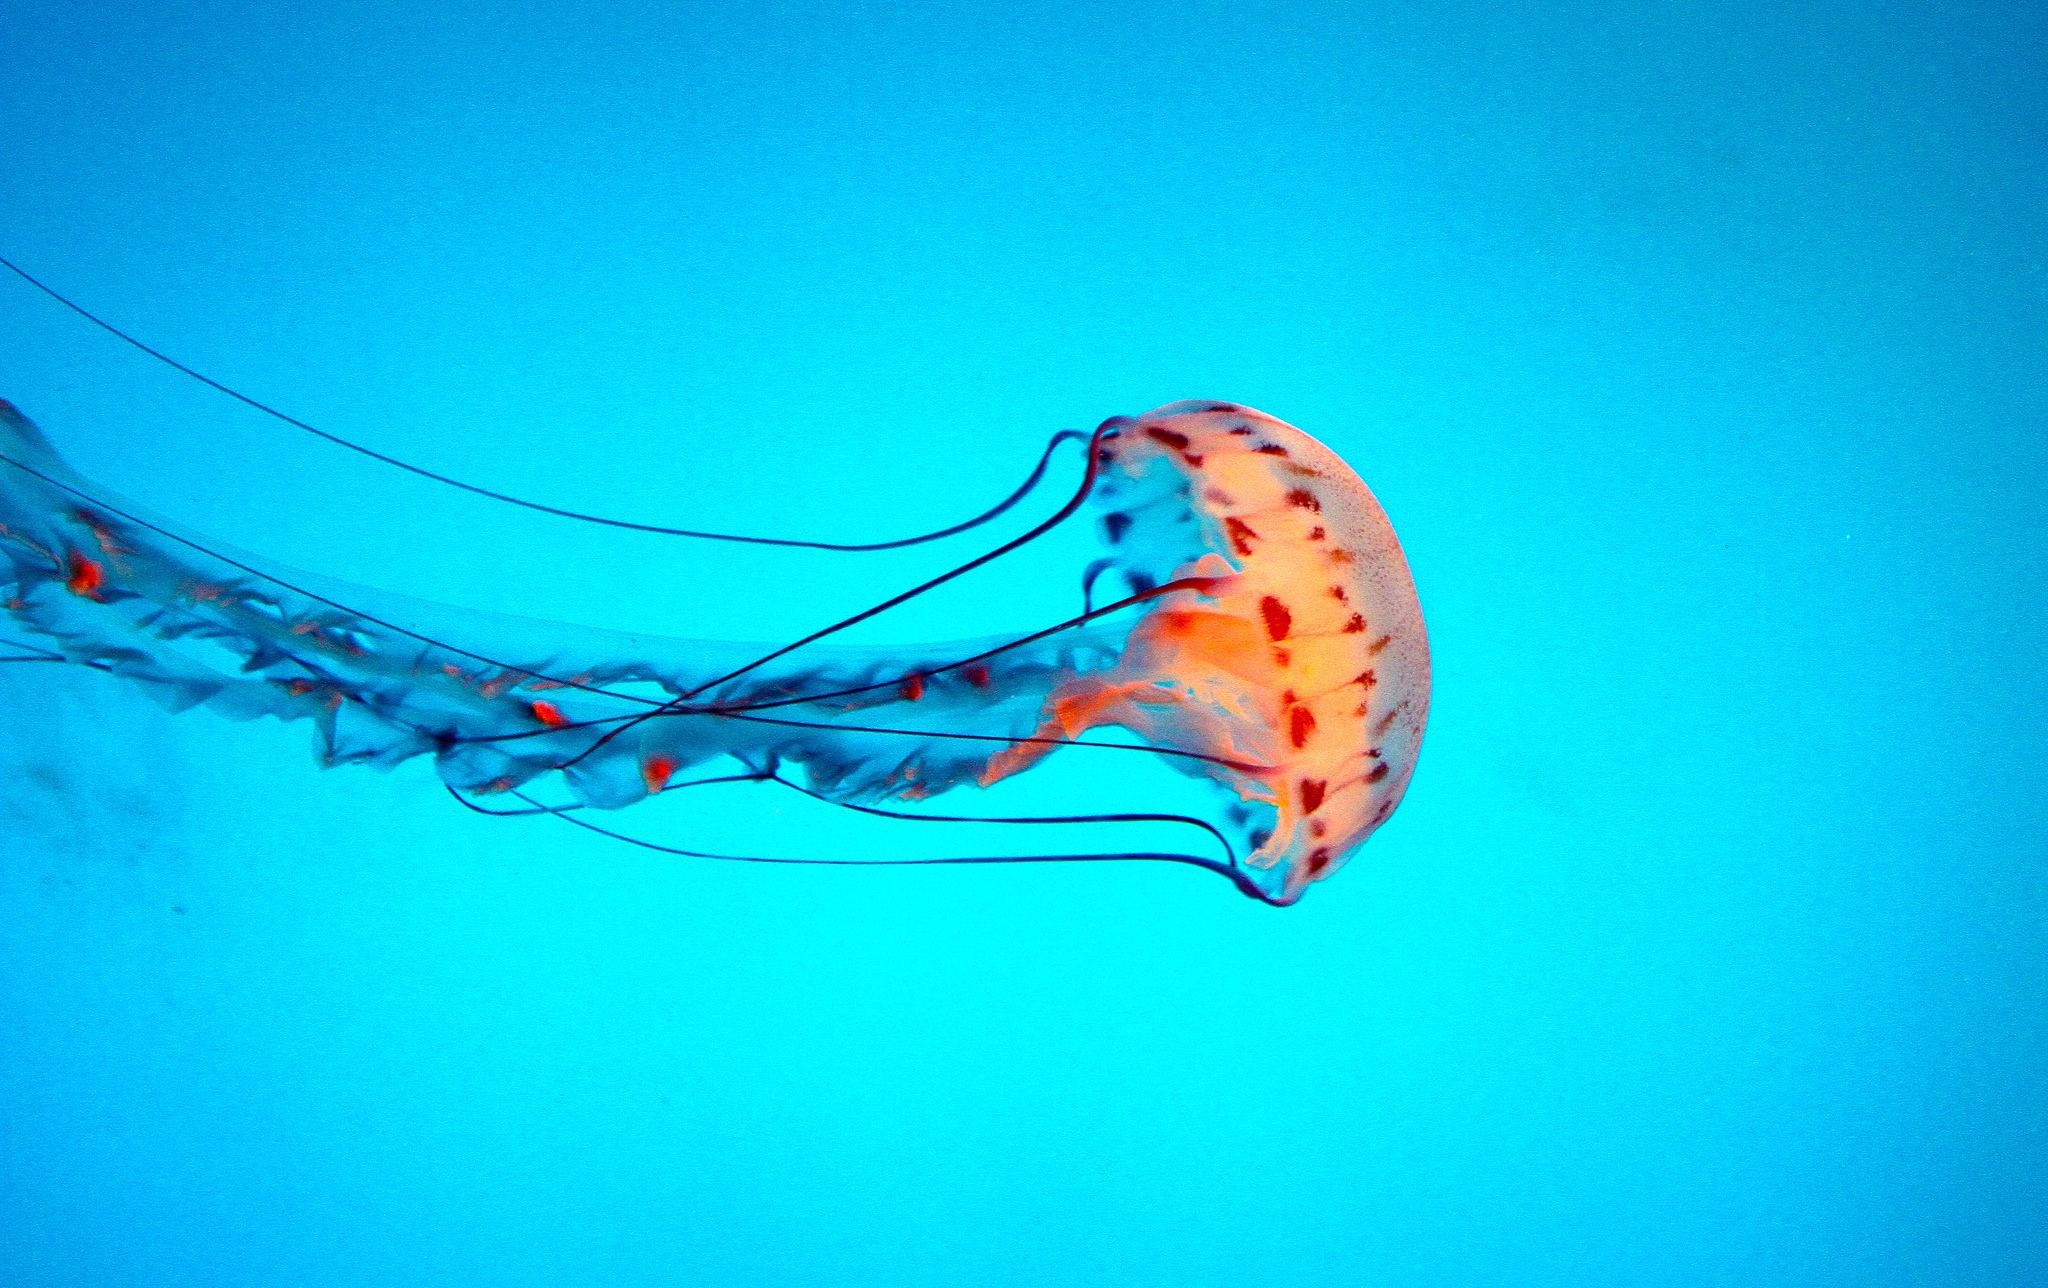 Щупальца медузы